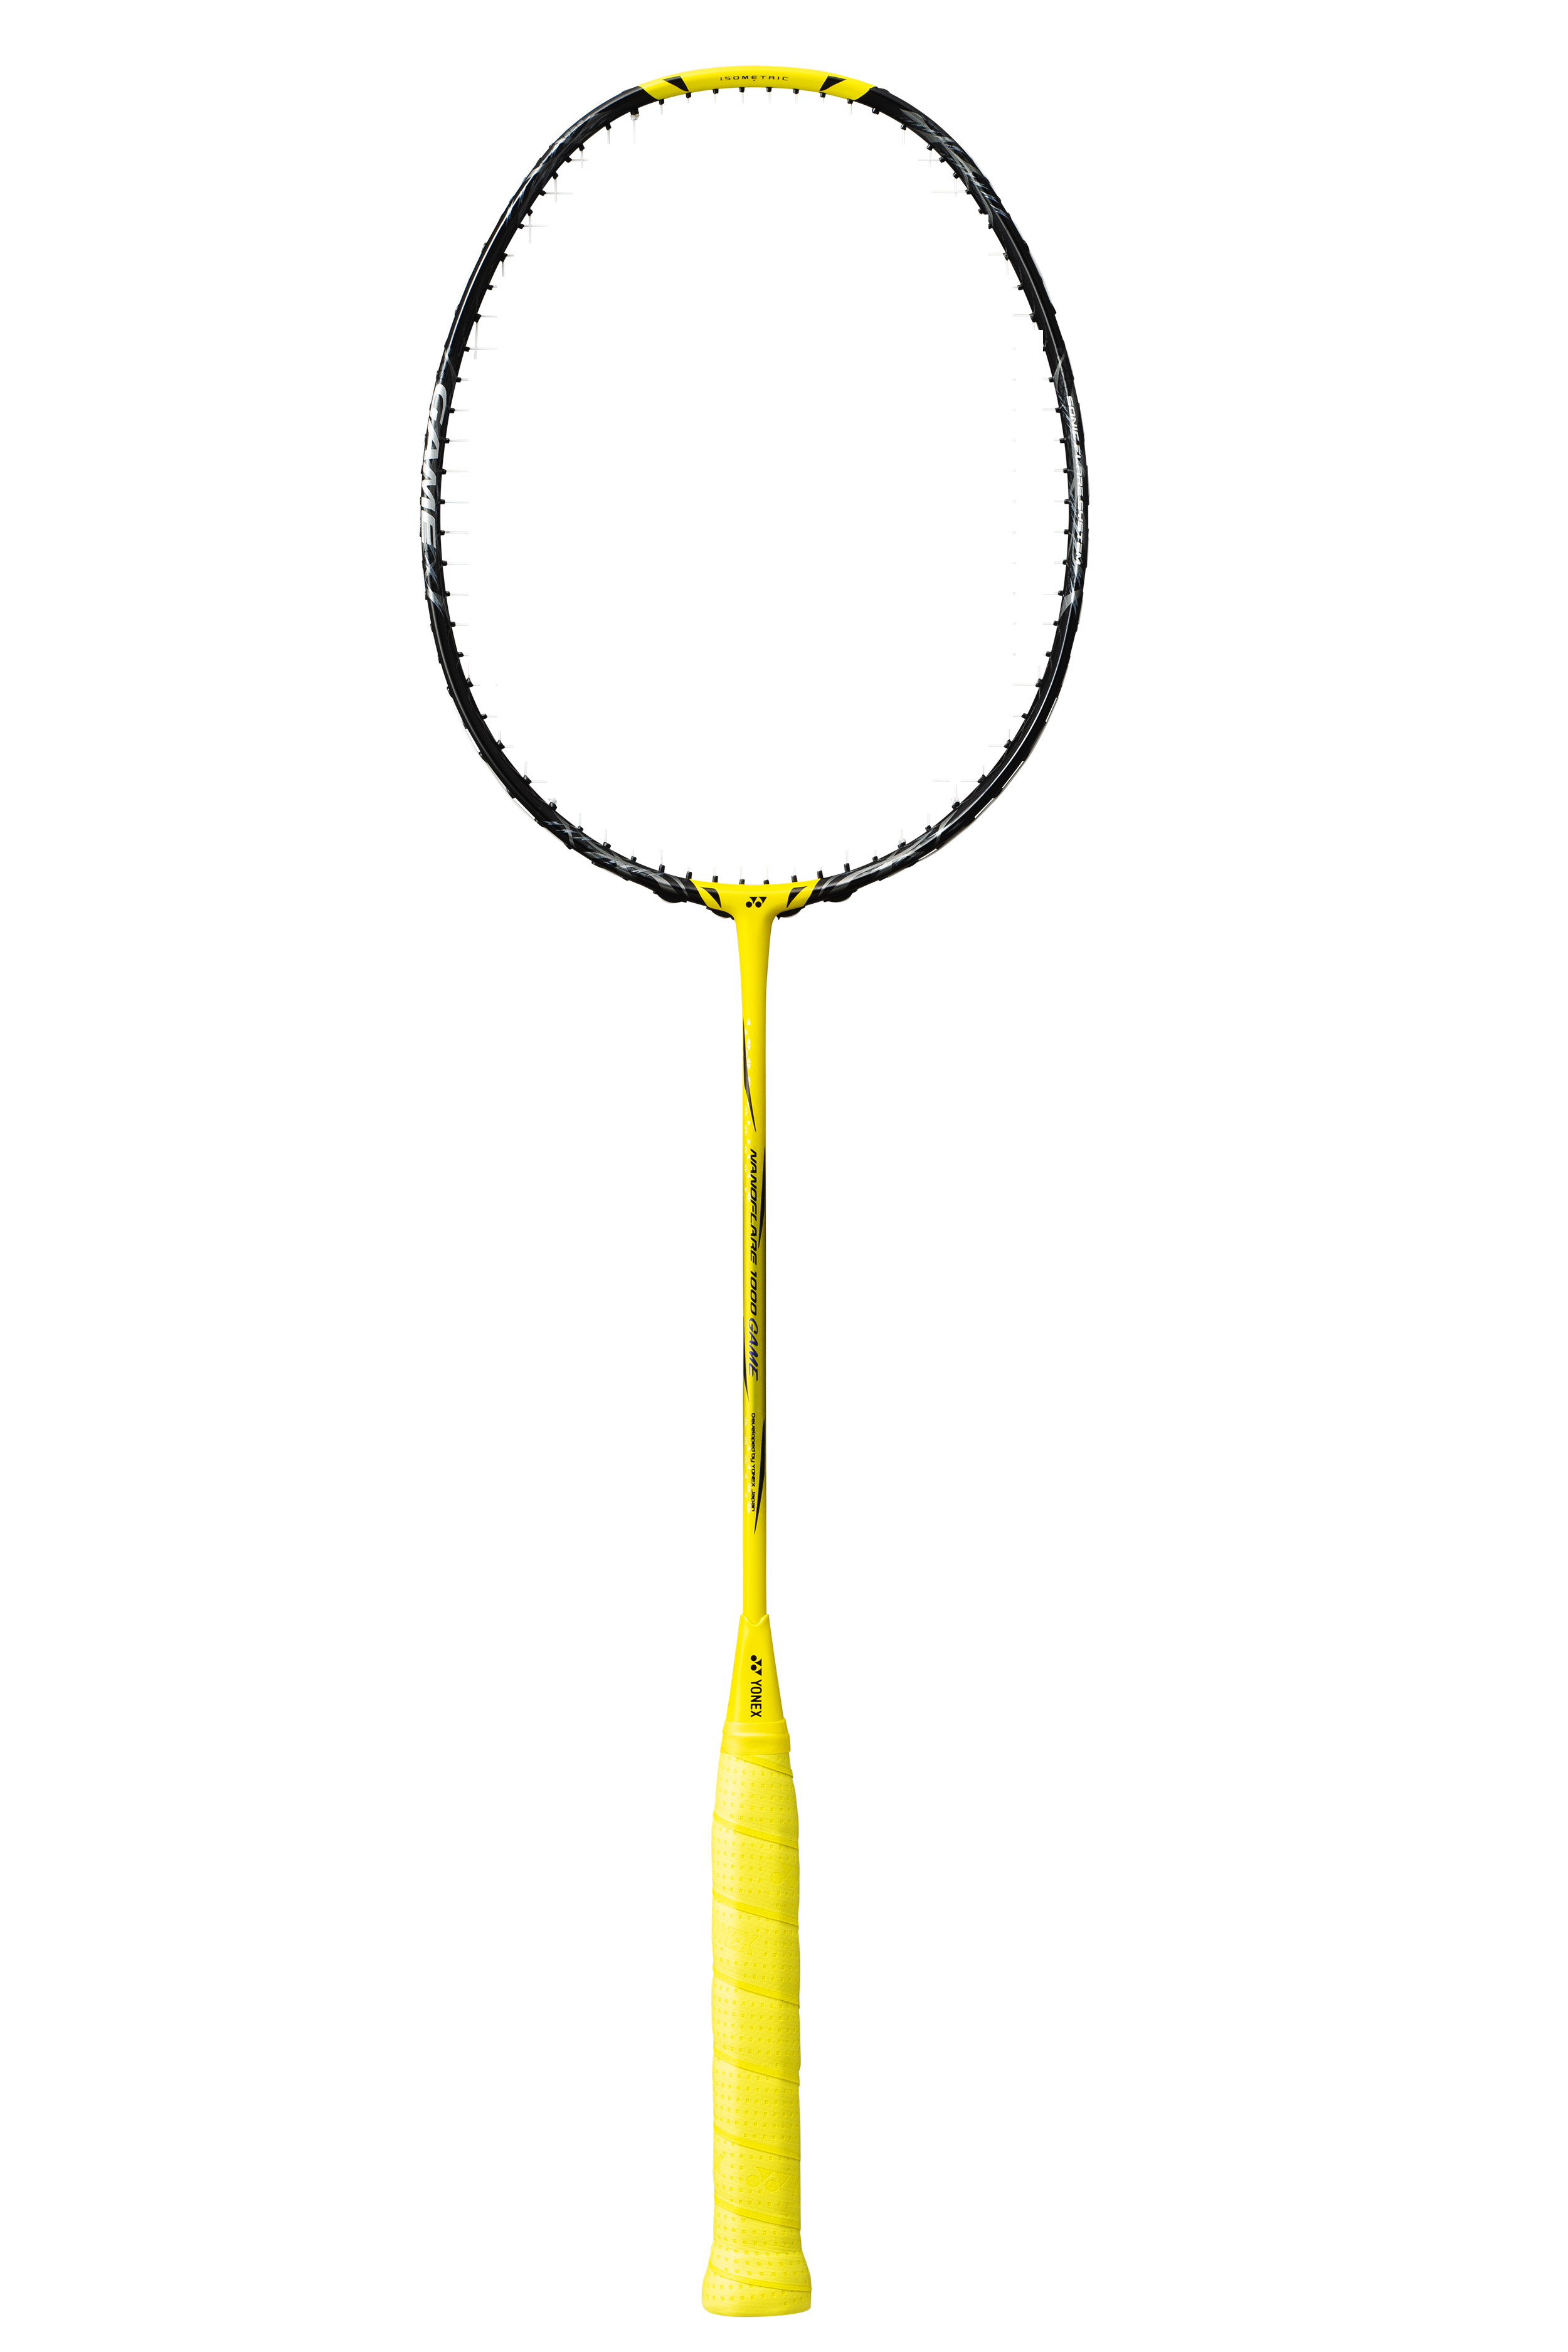 YONEX Nanoflare 1000 Game Badminton Racquet - Lightning Yellow